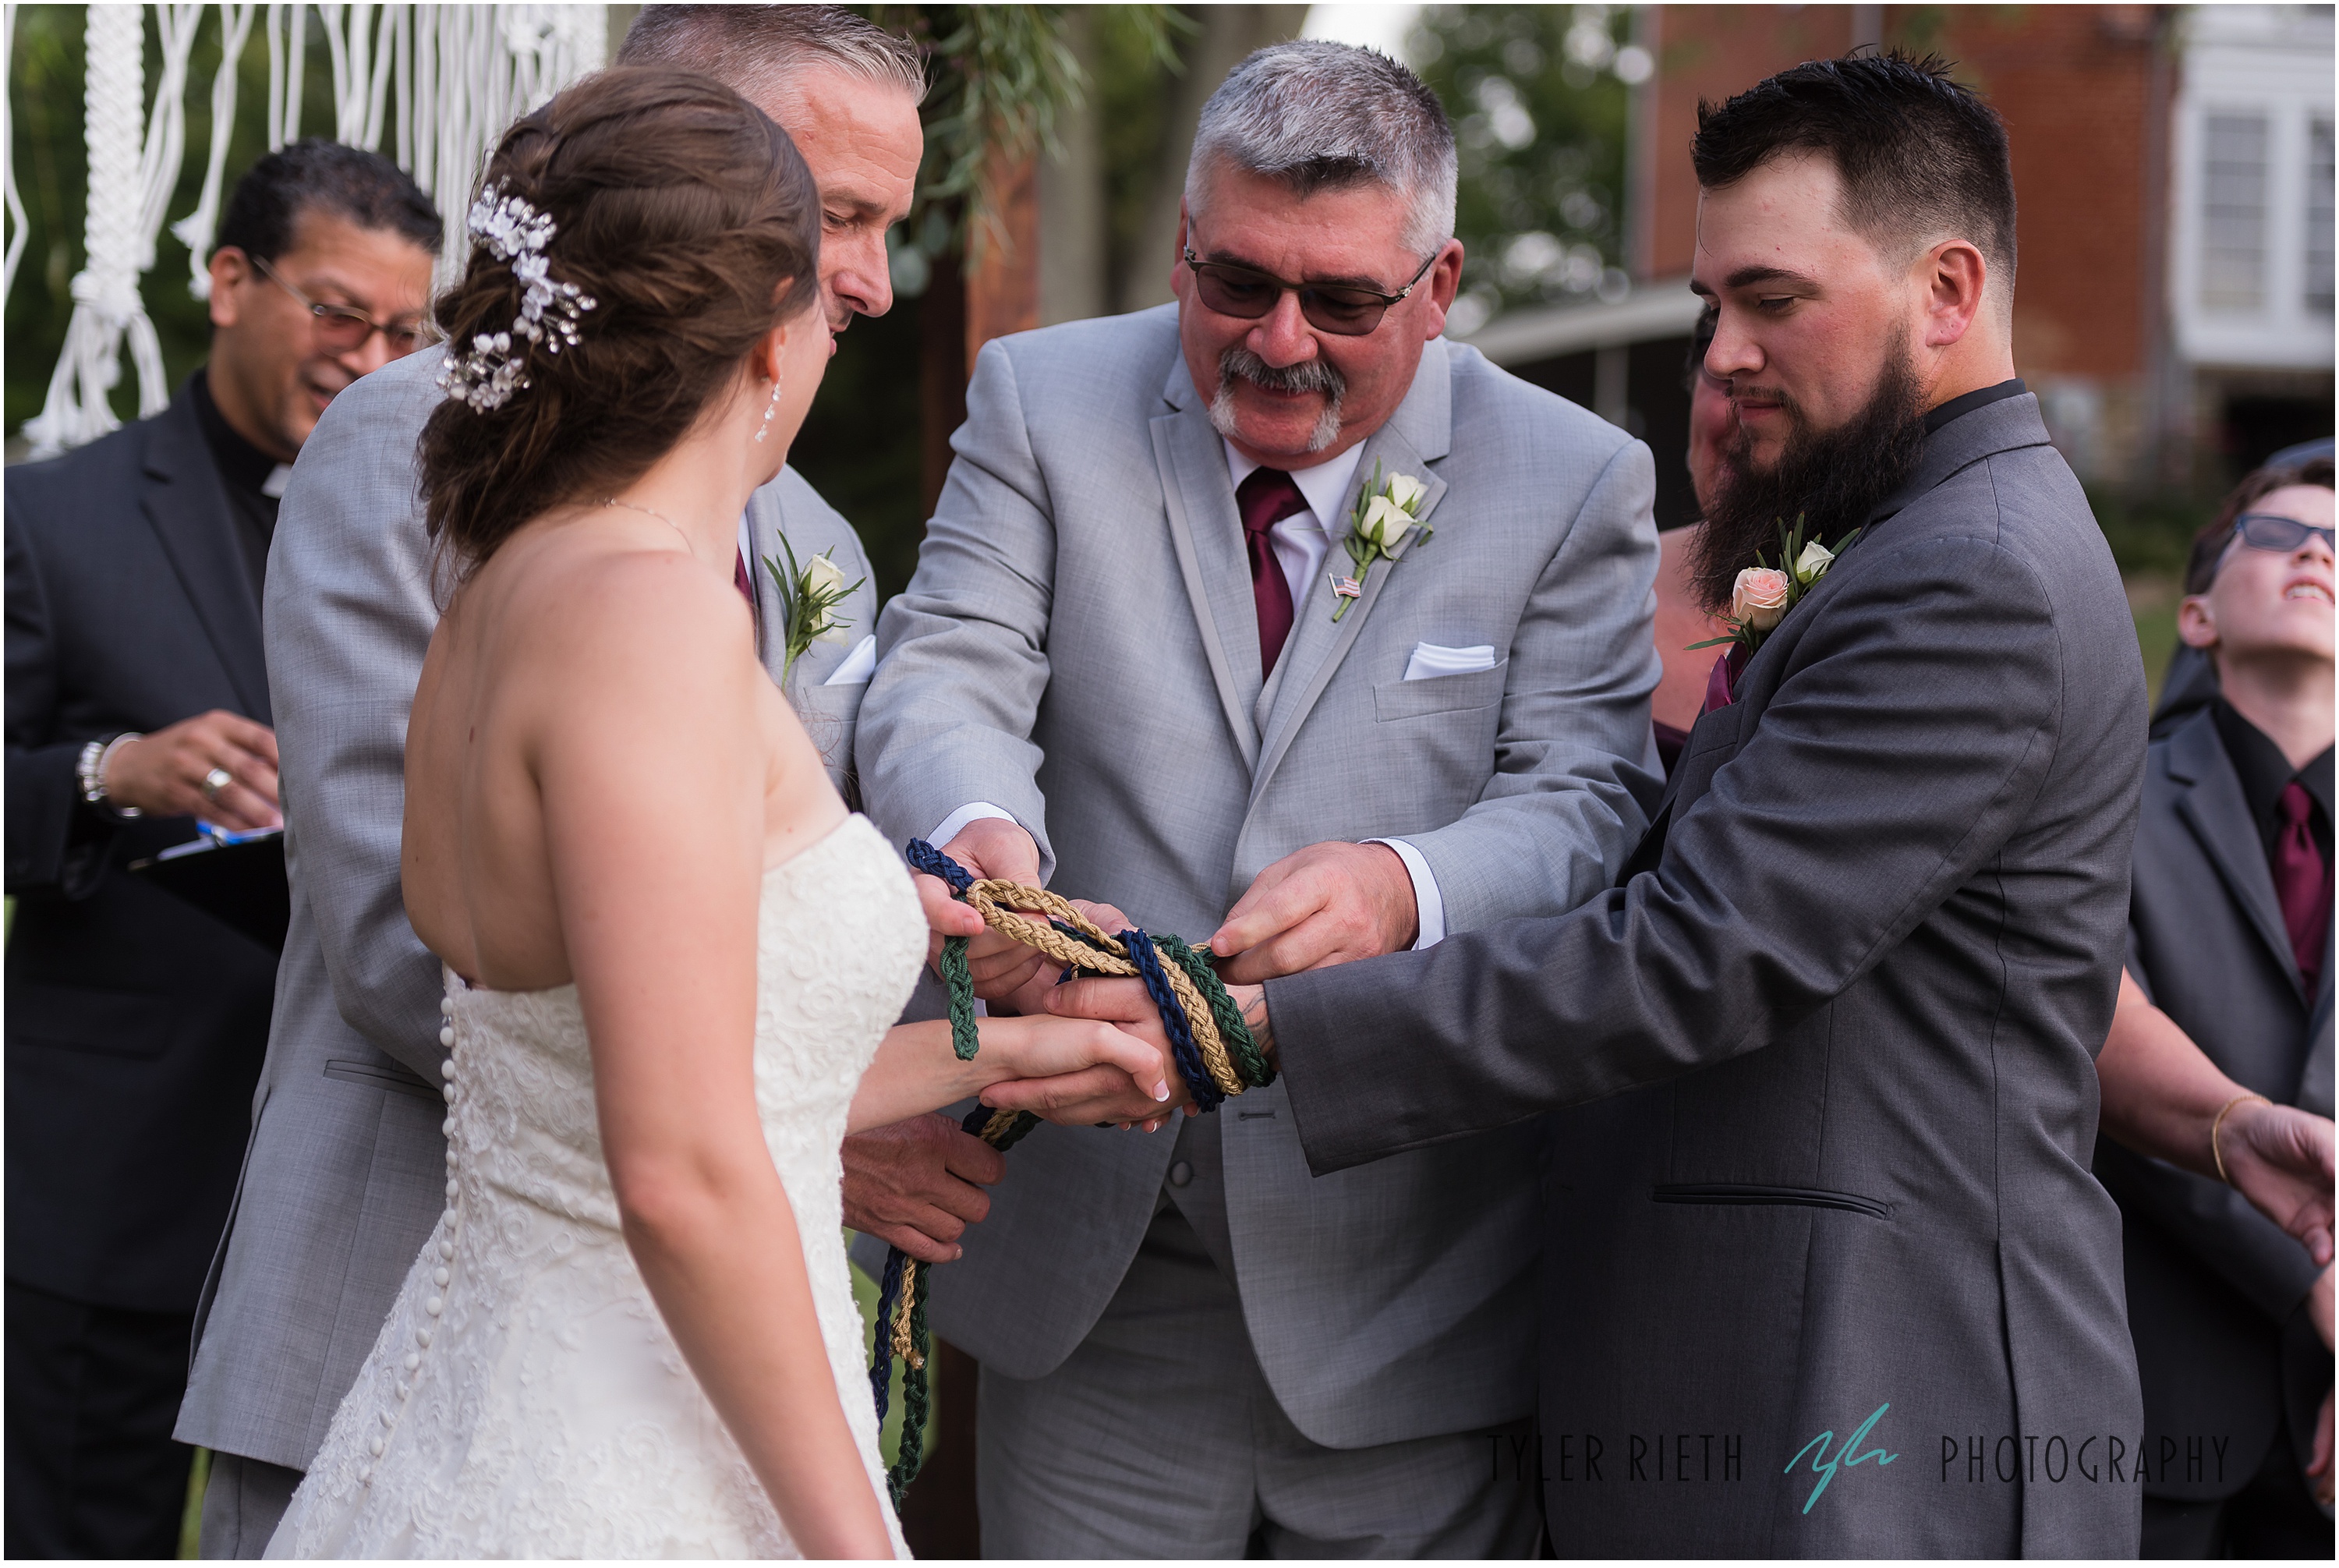 Royer House Wedding | Baltimore Wedding Photography